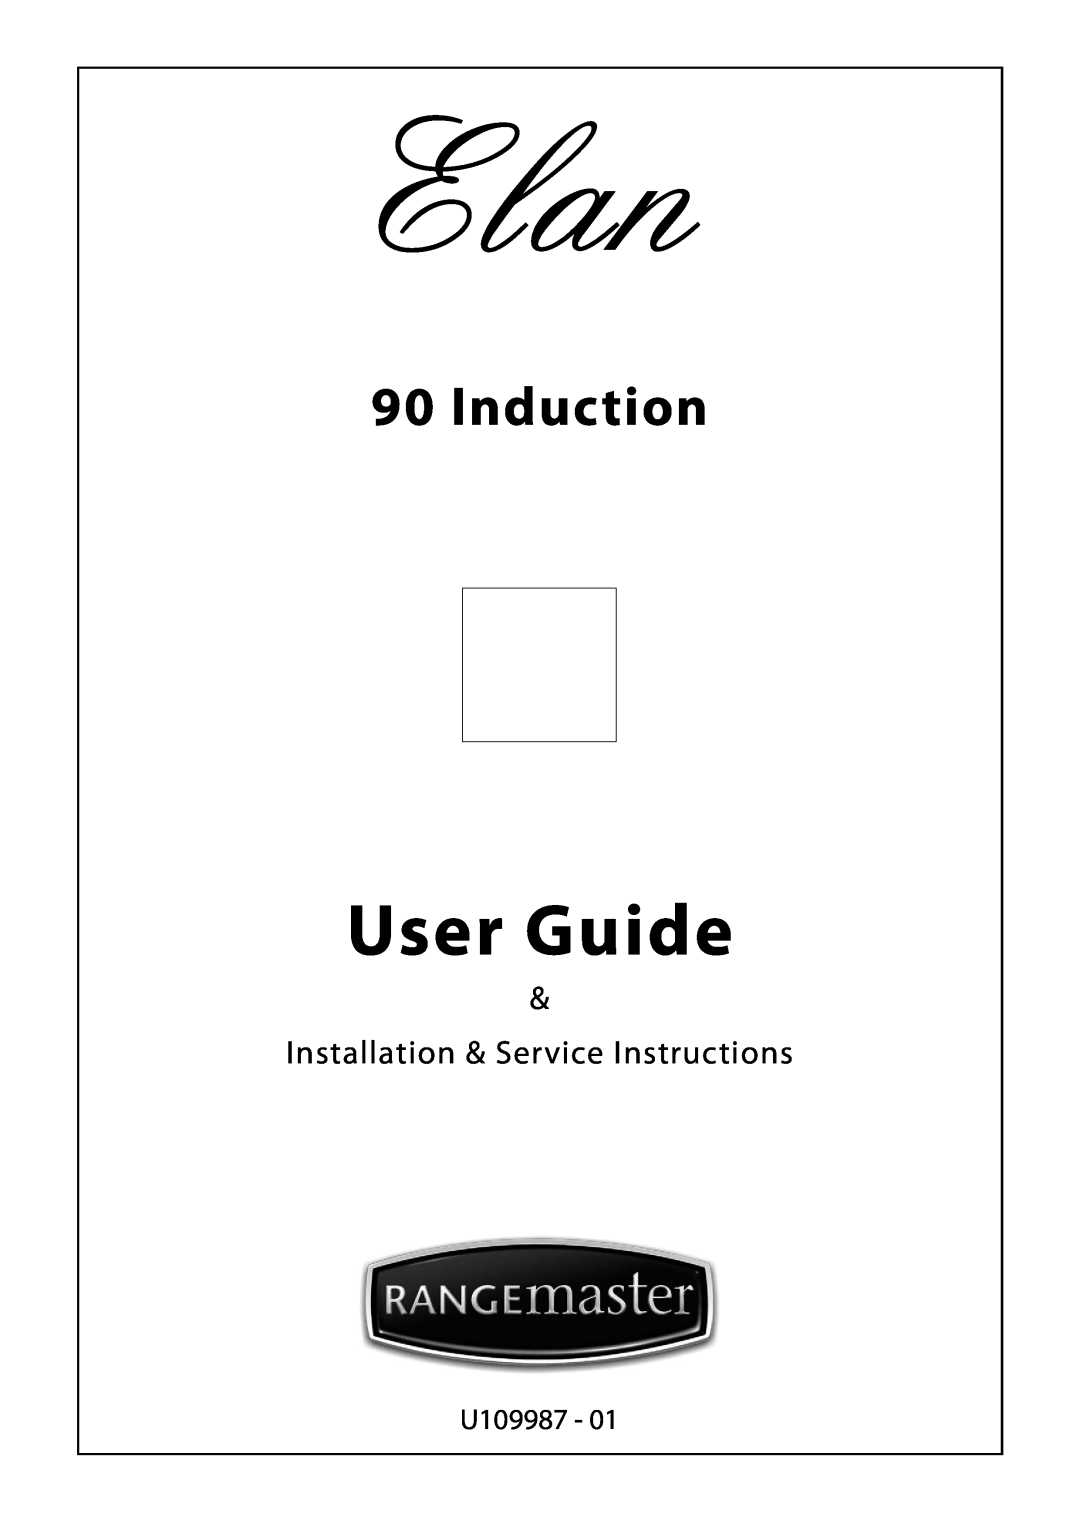 Rangemaster U109987 - 01 manual User Guide, Induction, Installation & Service Instructions 